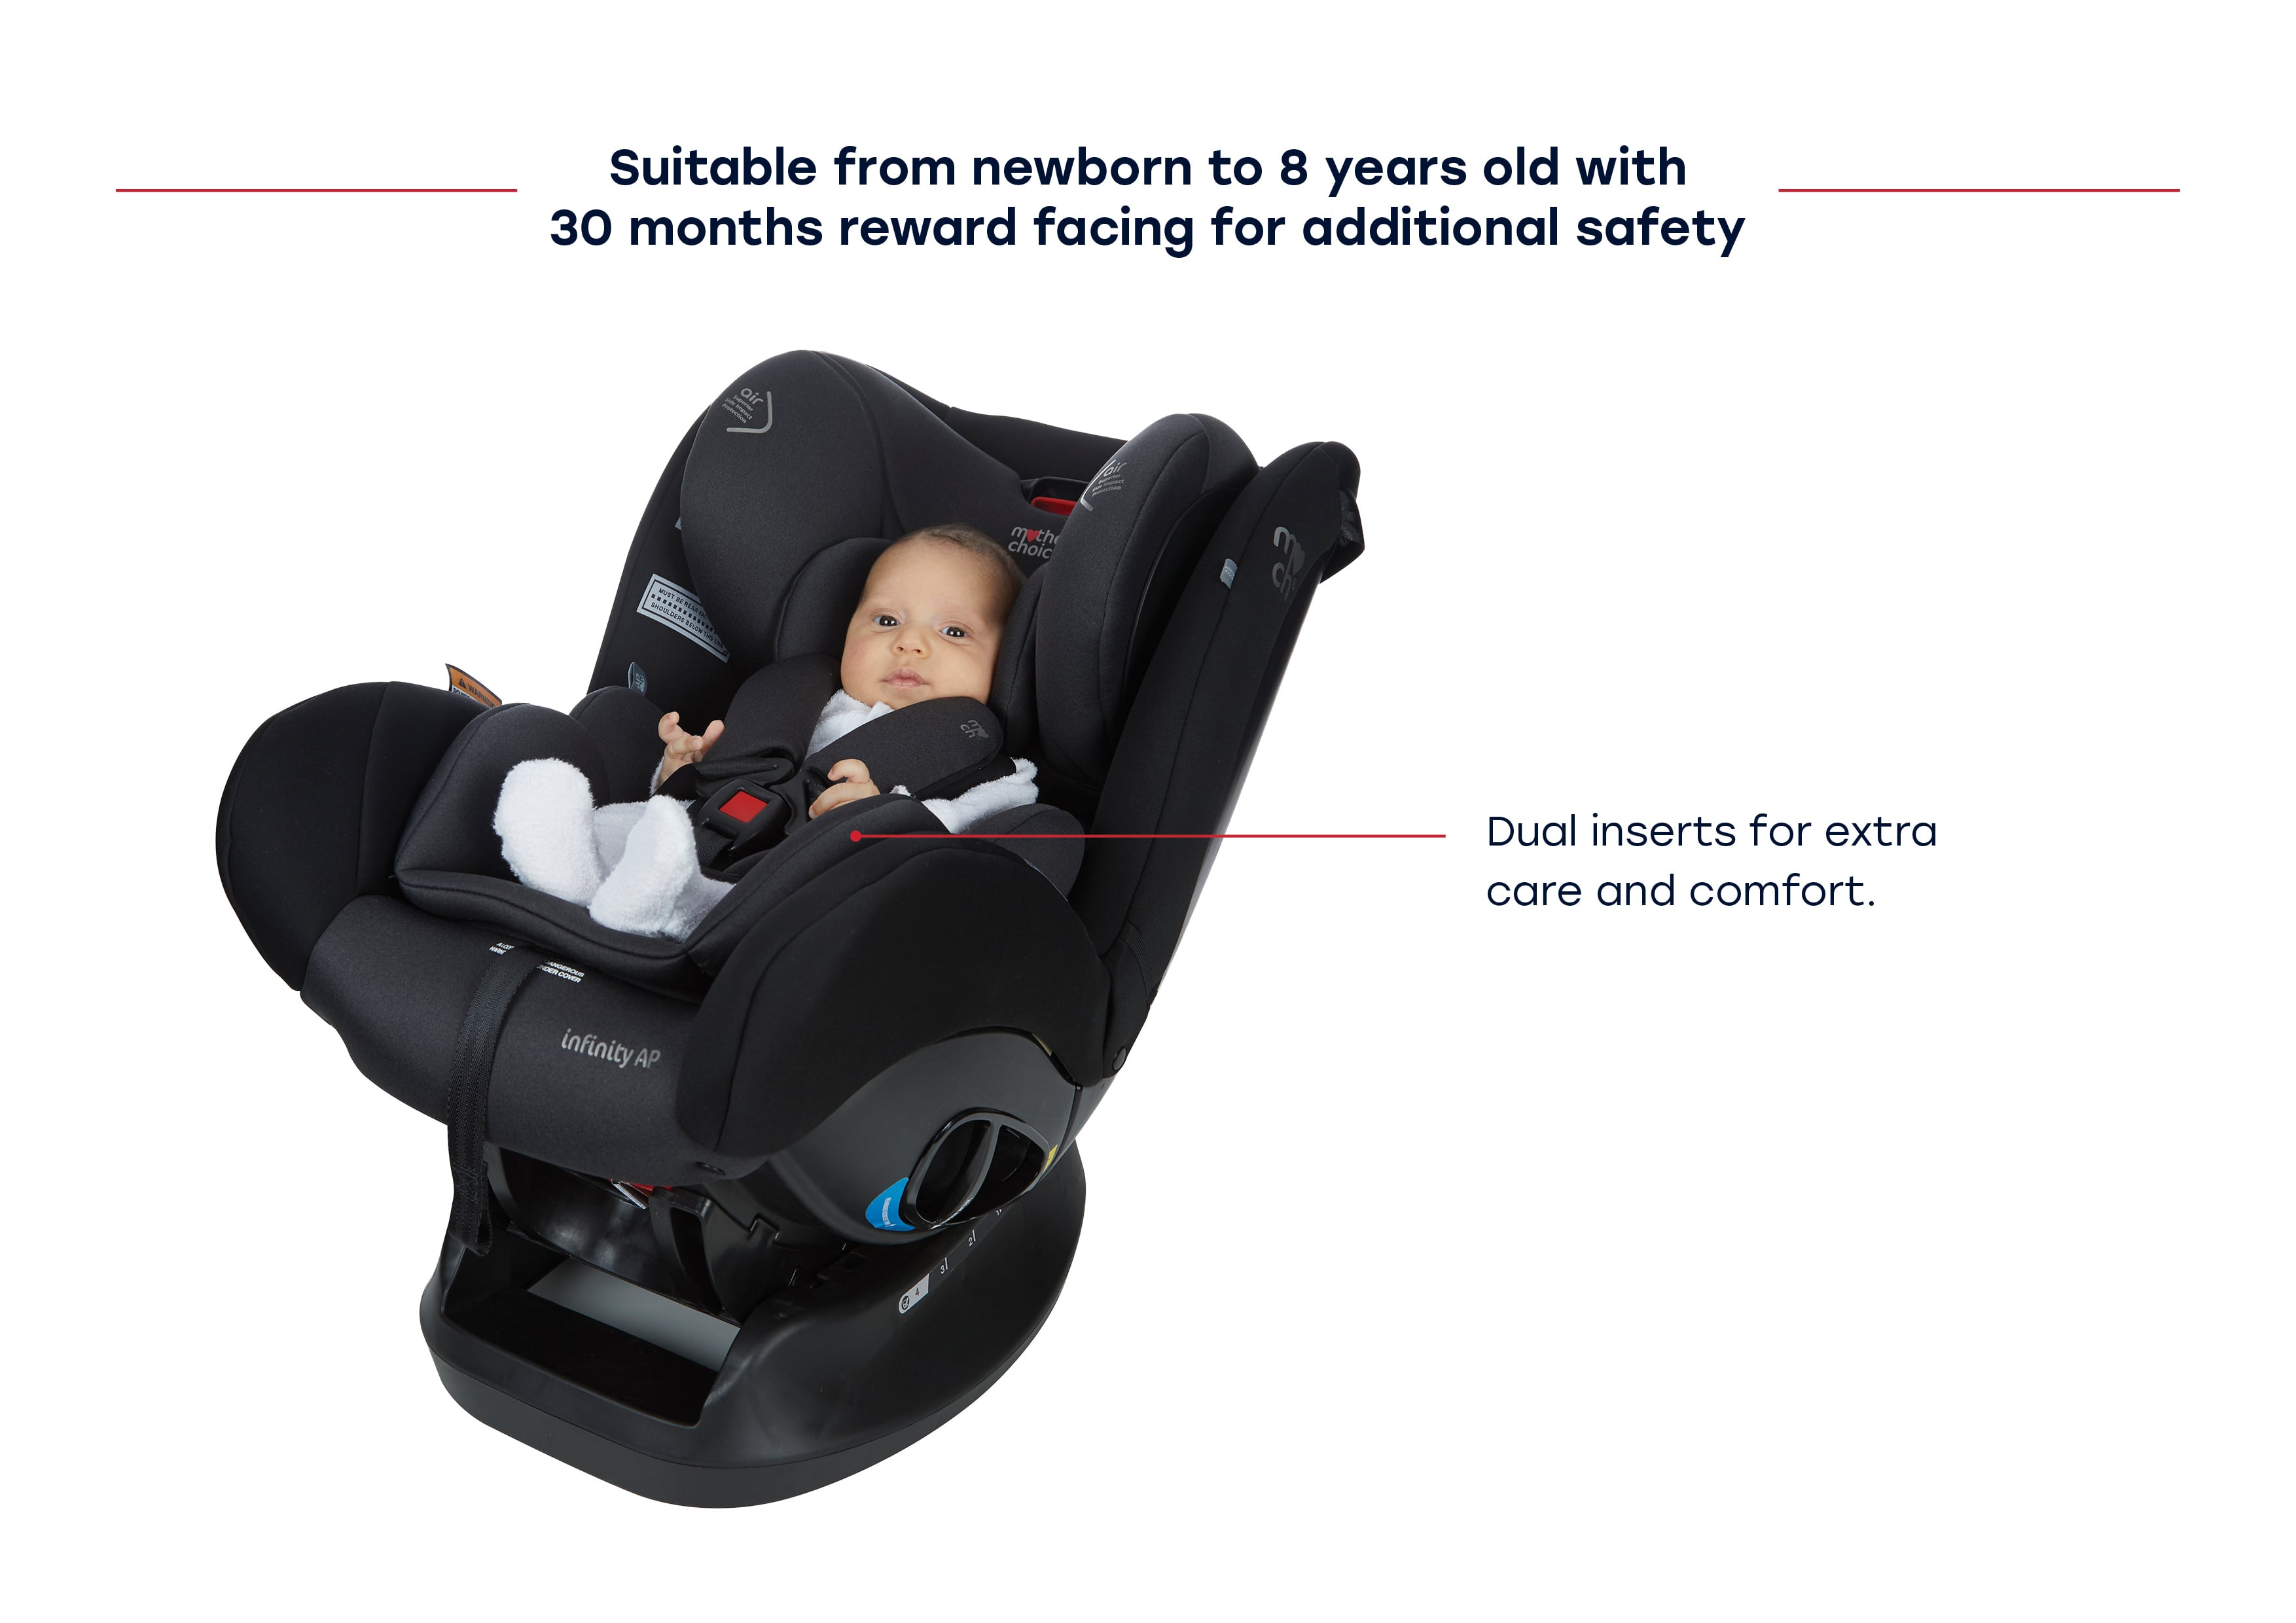 Mother's Choice Infinity Convertible Car Seat - Good Design